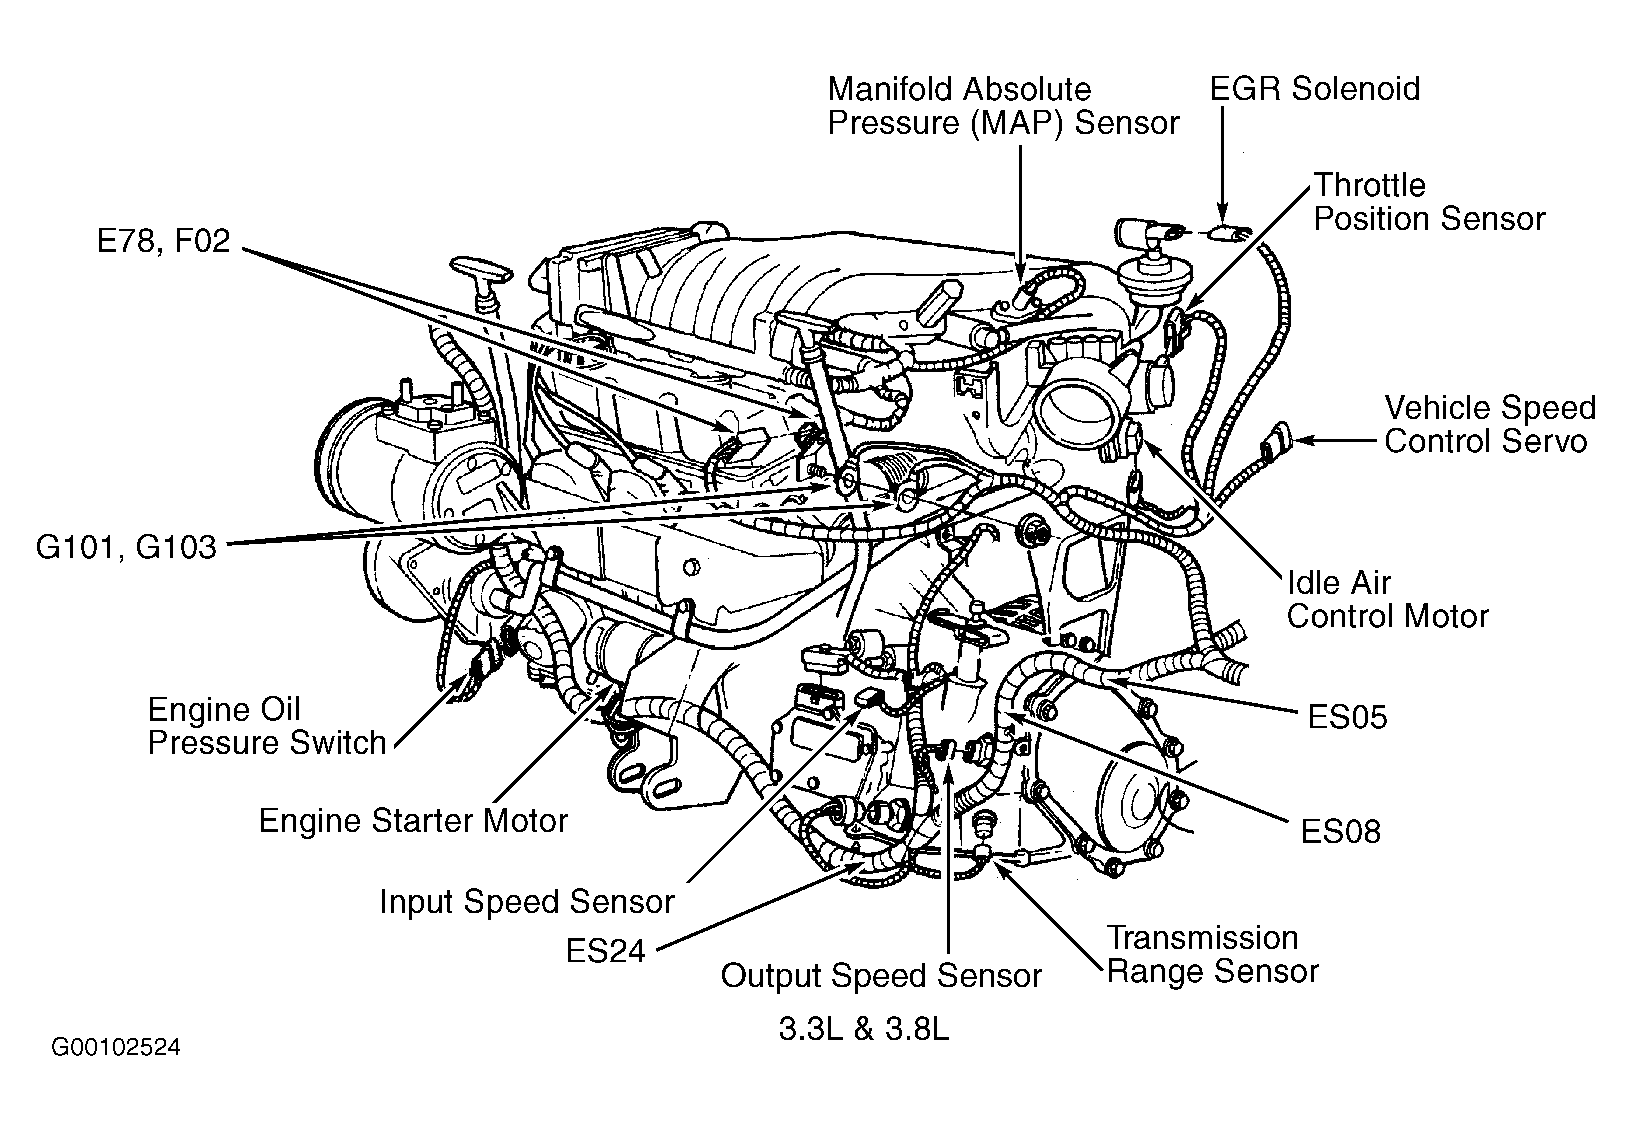 Wiring Diagram For 2000 Dodge Caravan, 2001 Dodge Caravan Starter Wiring Diagram